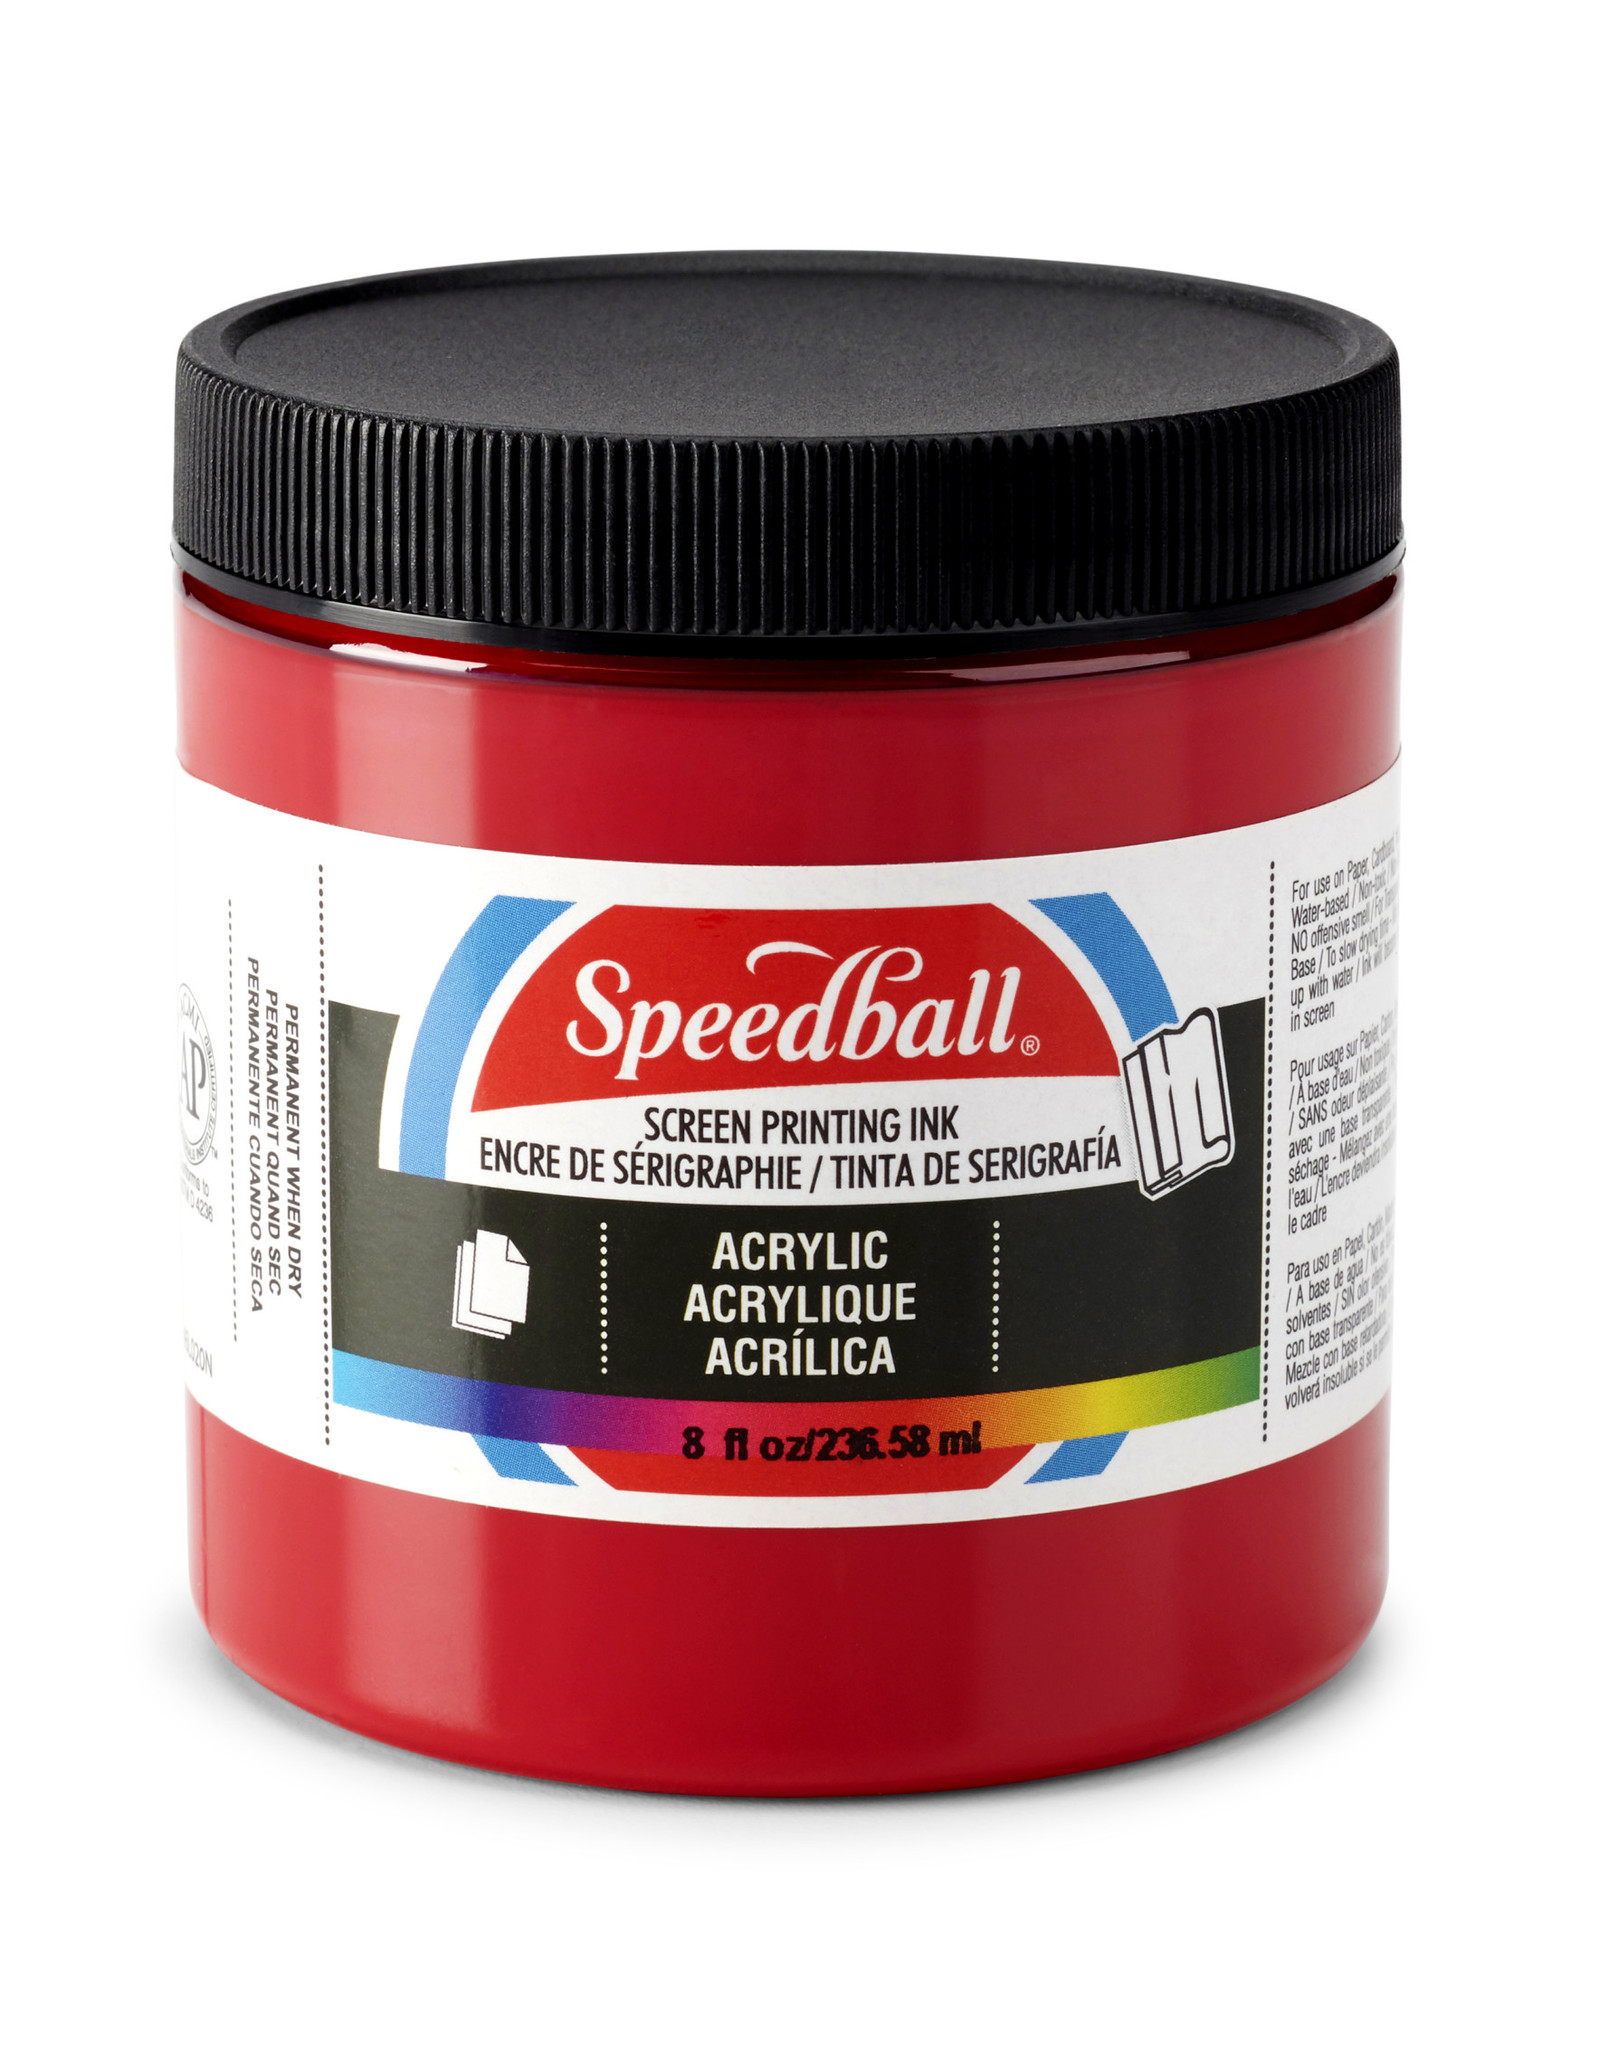 SPEEDBALL ART PRODUCTS Speedball Acrylic Screen Printing Ink, Dark Red, 8oz